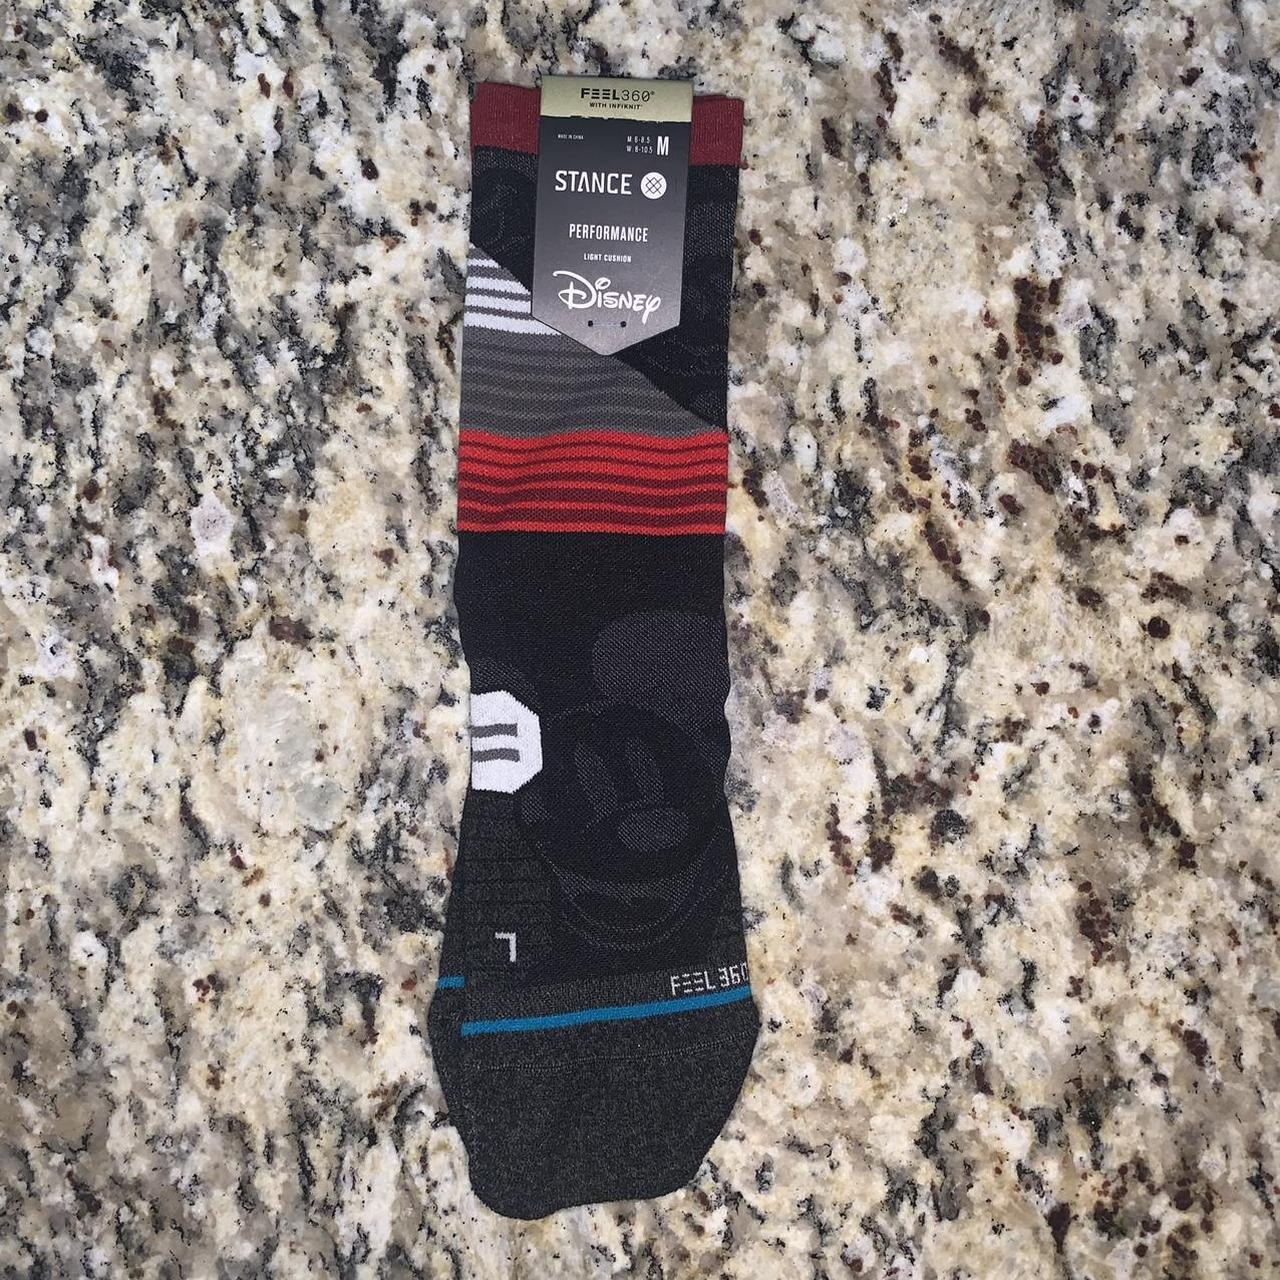 Stance Men's Black and Red Socks